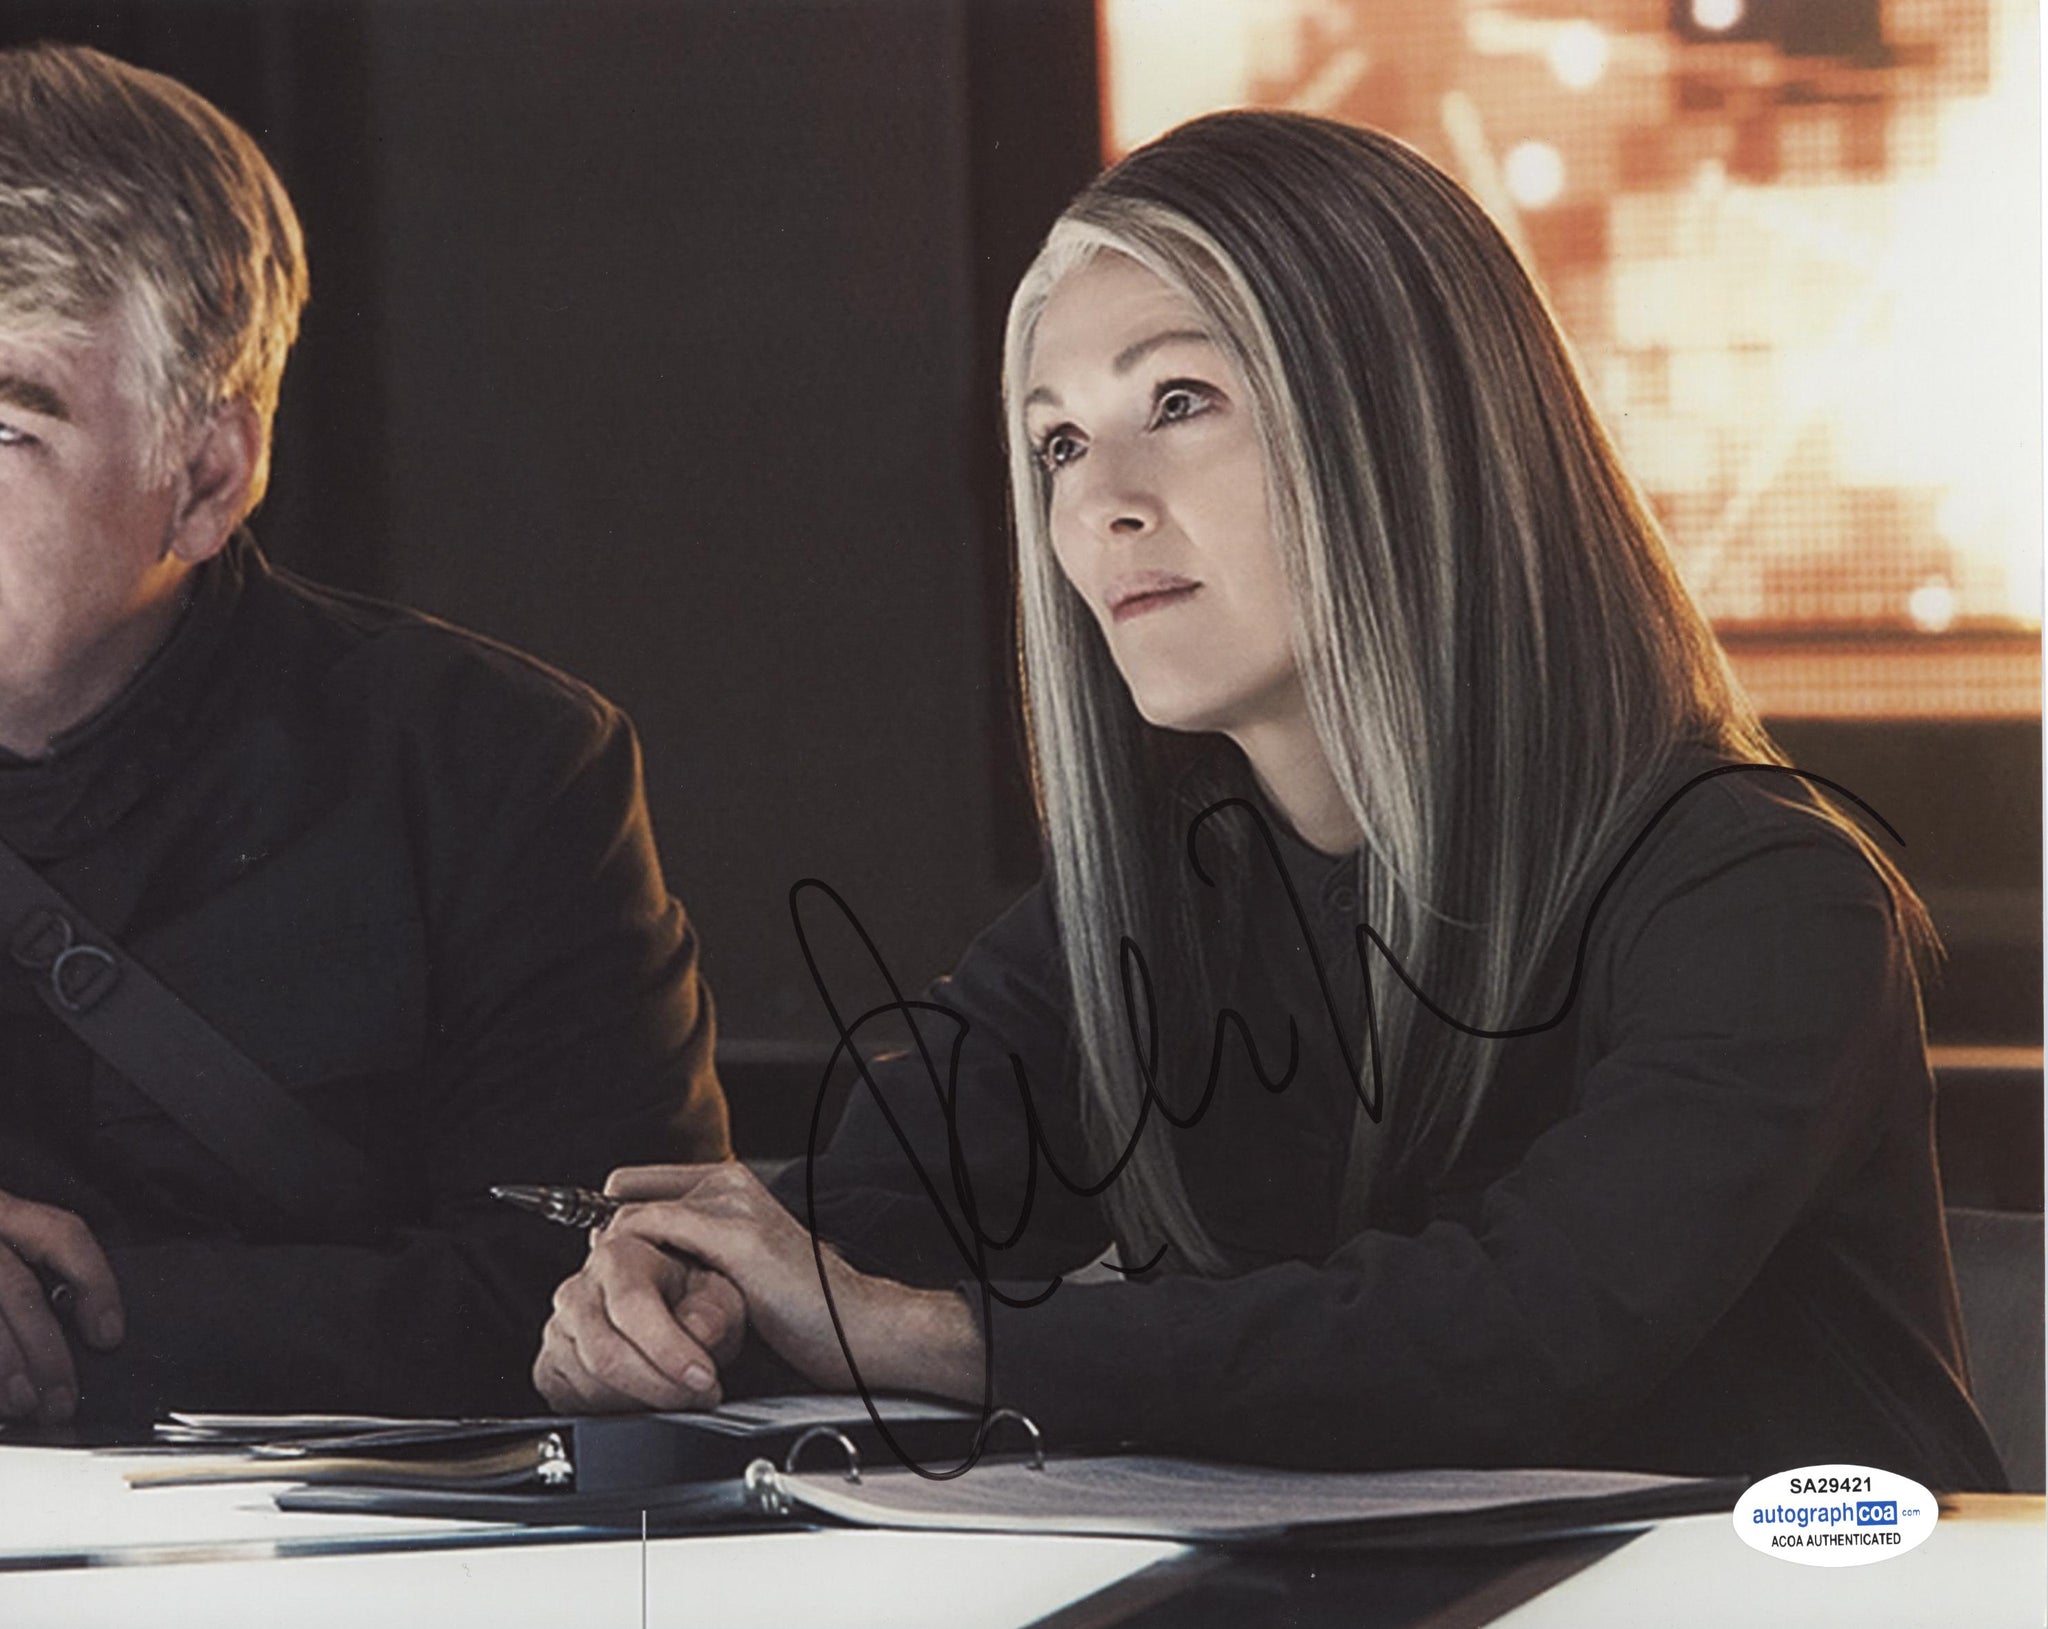 Julianne Moore Hunger Games Signed Autograph 8x10 Photo ACOA #18 - Outlaw Hobbies Authentic Autographs